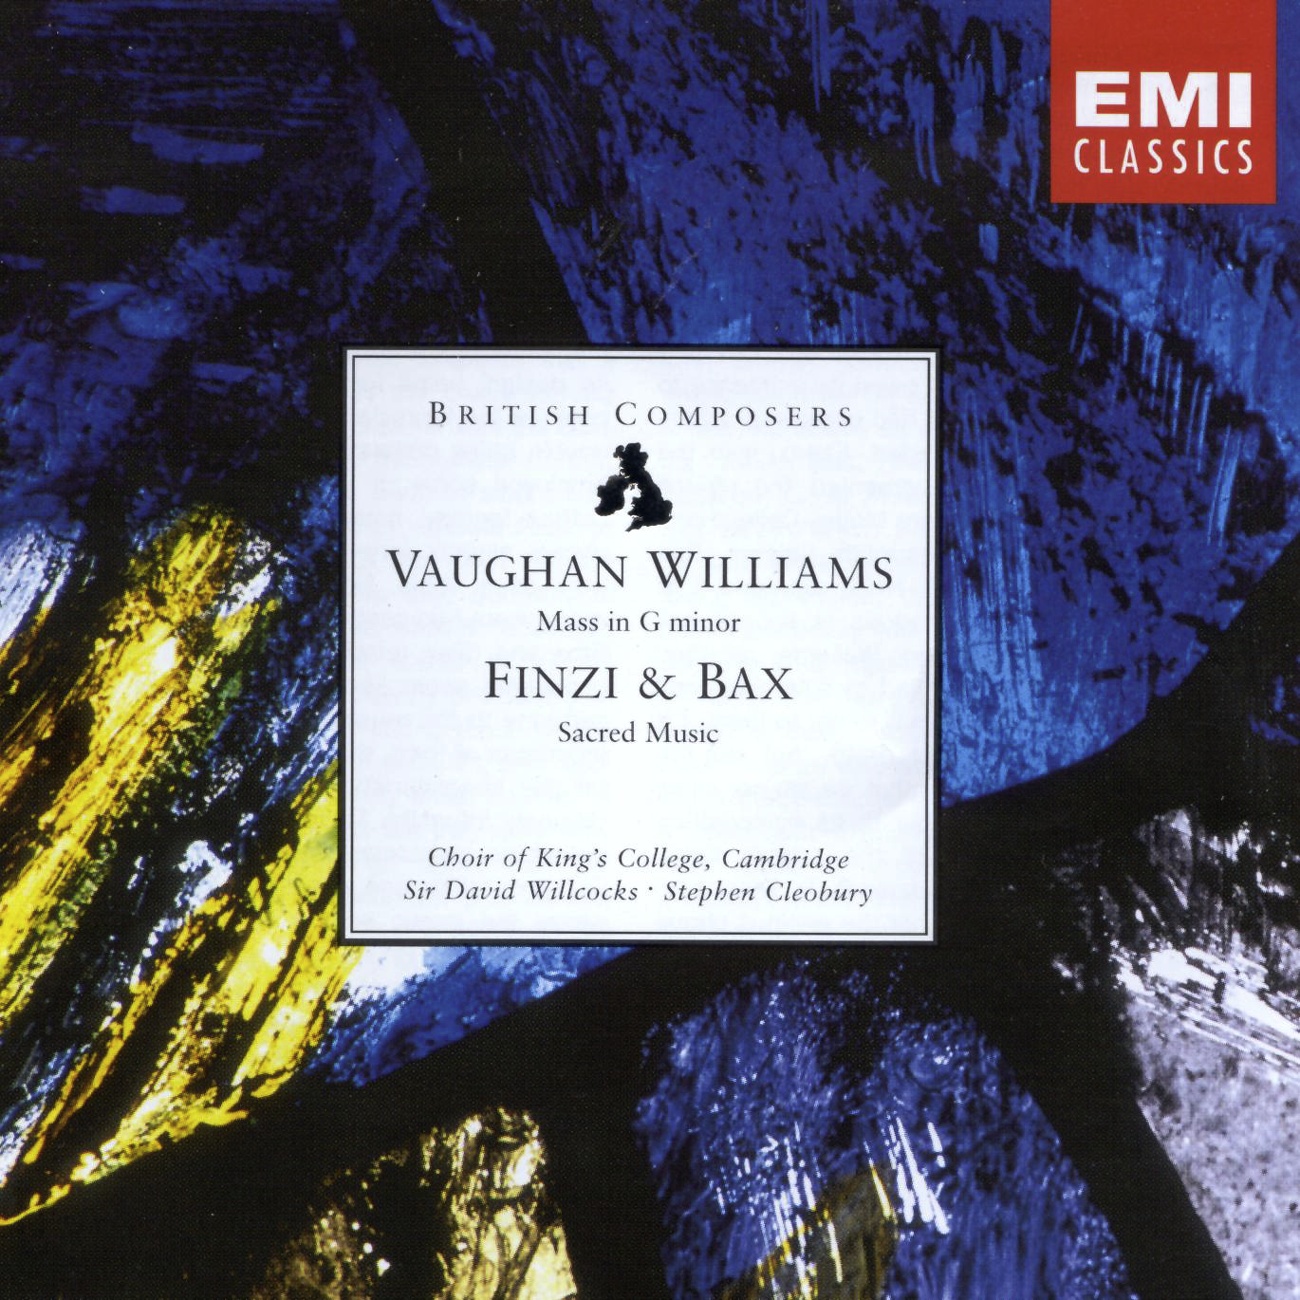 Music By Fax/Binzi/Vaughan Williams